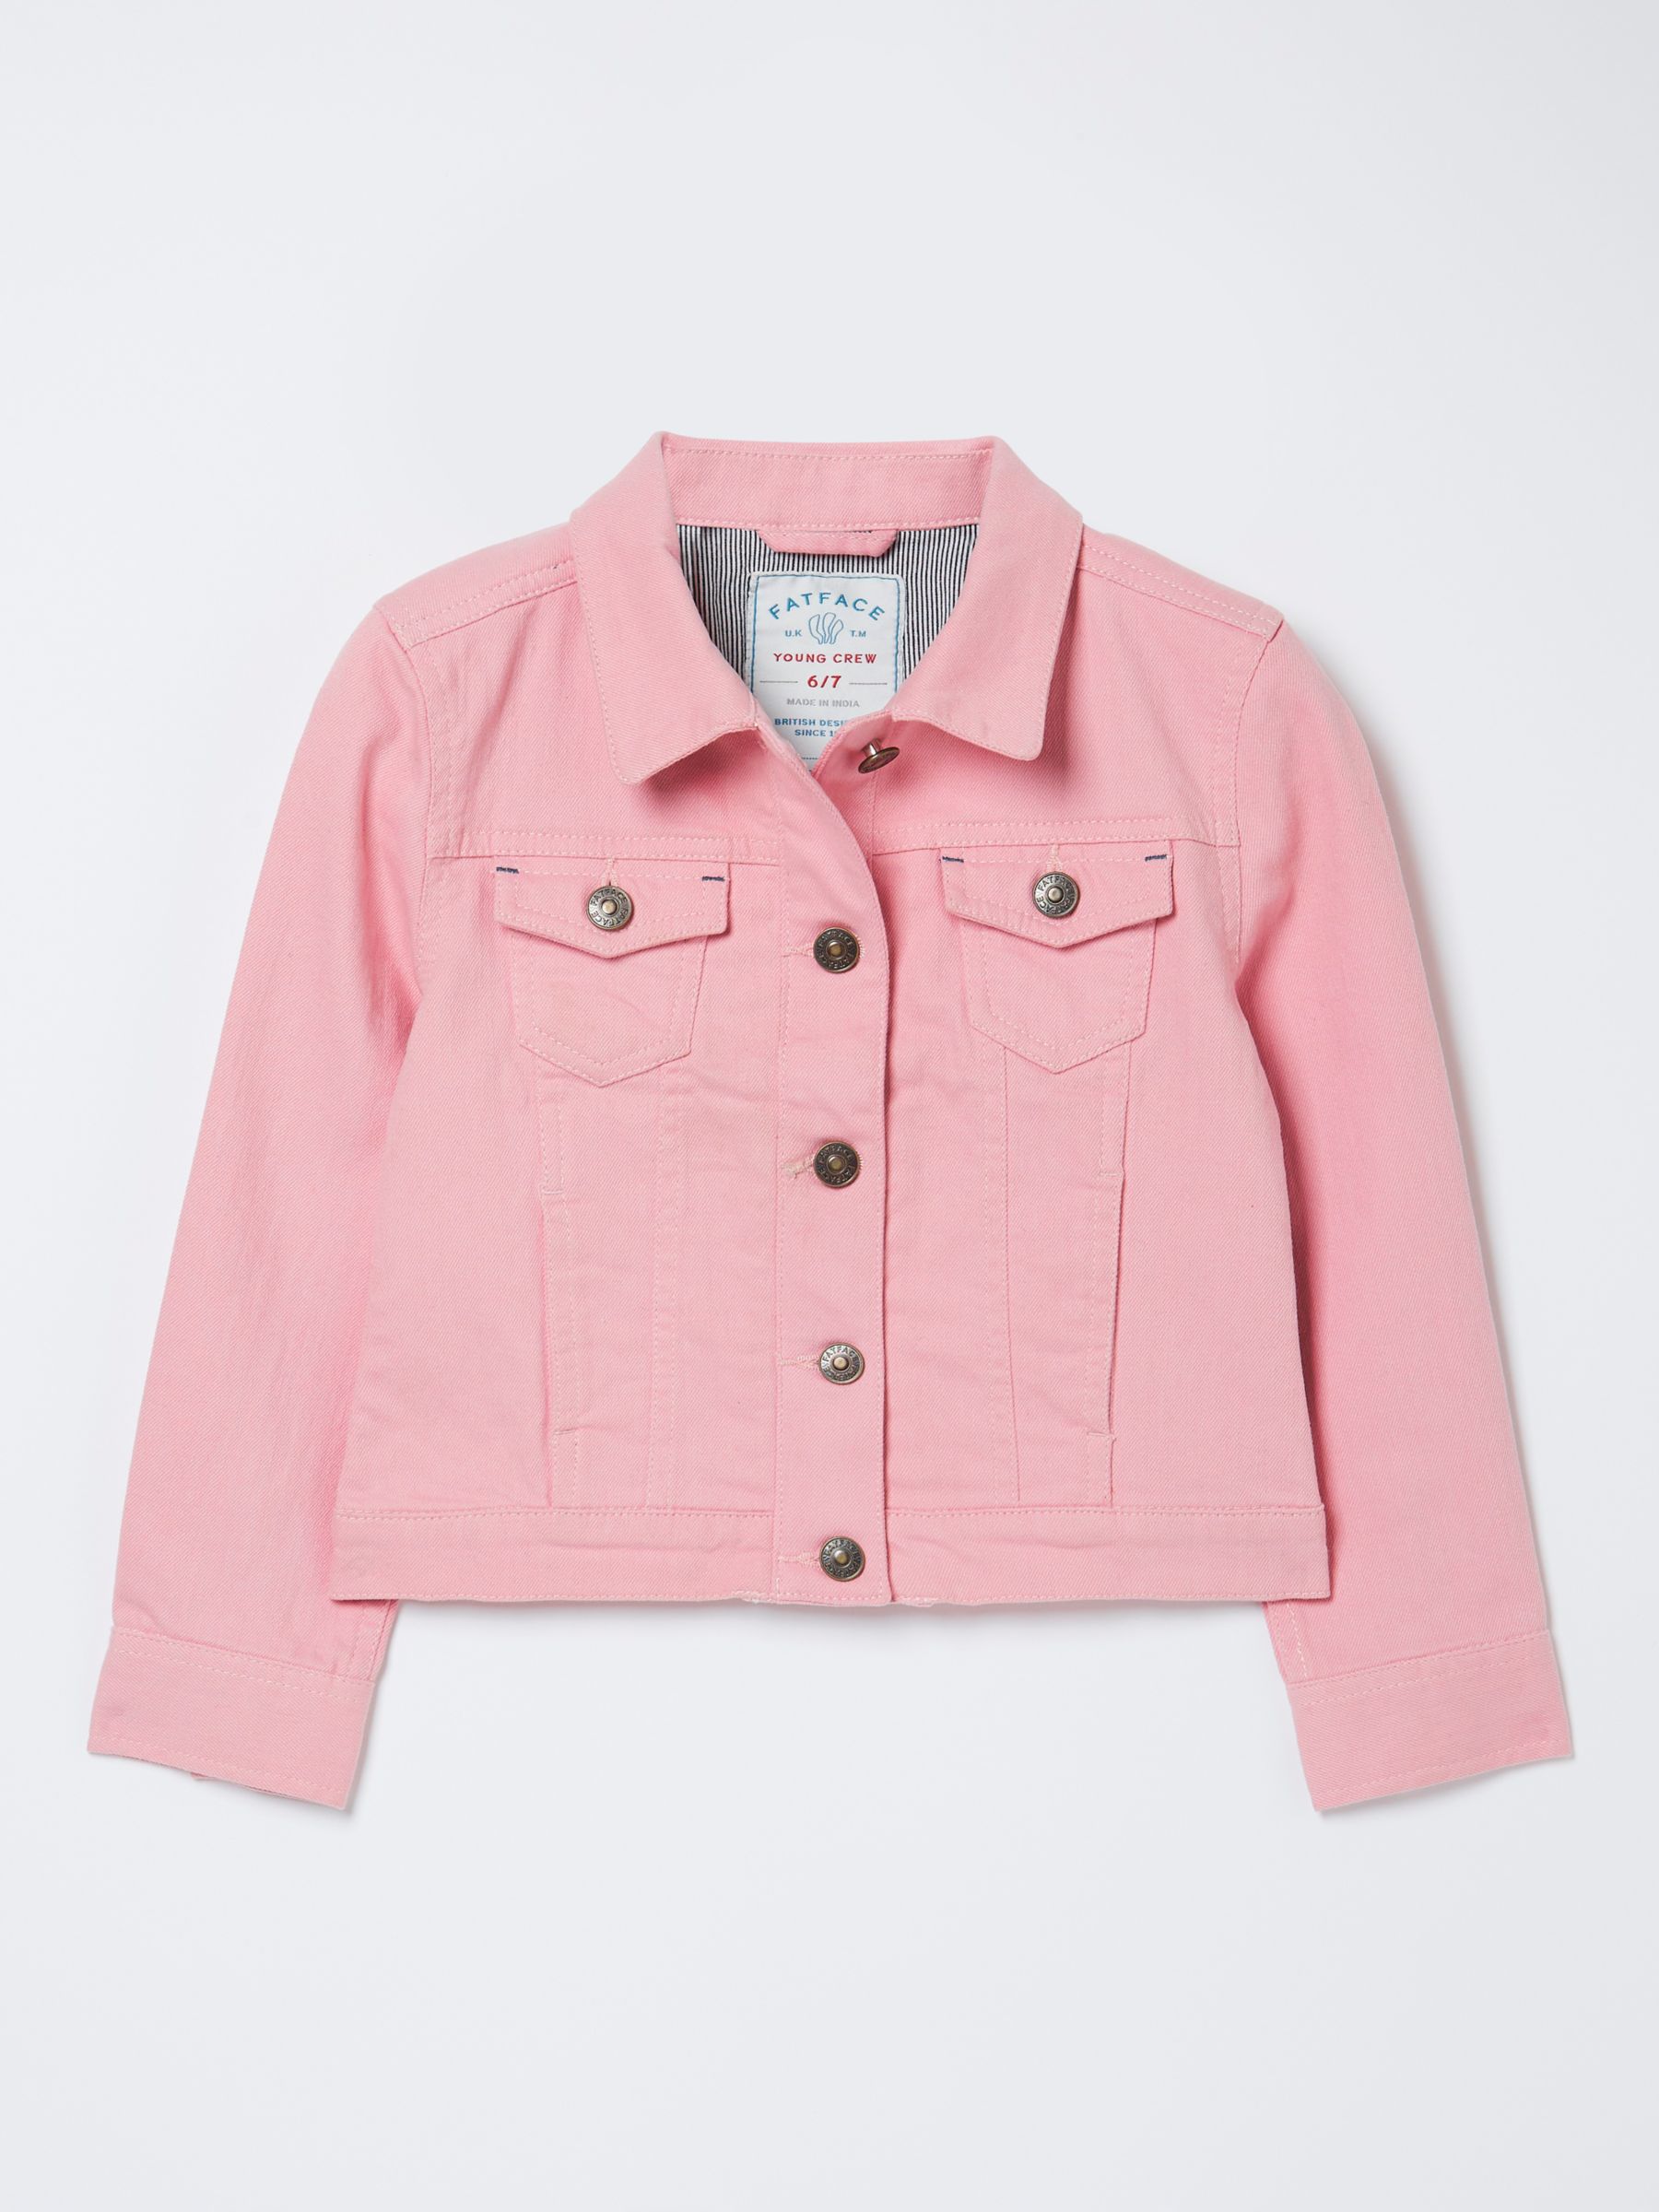 FatFace Kids' Coloured Jacket, Pink